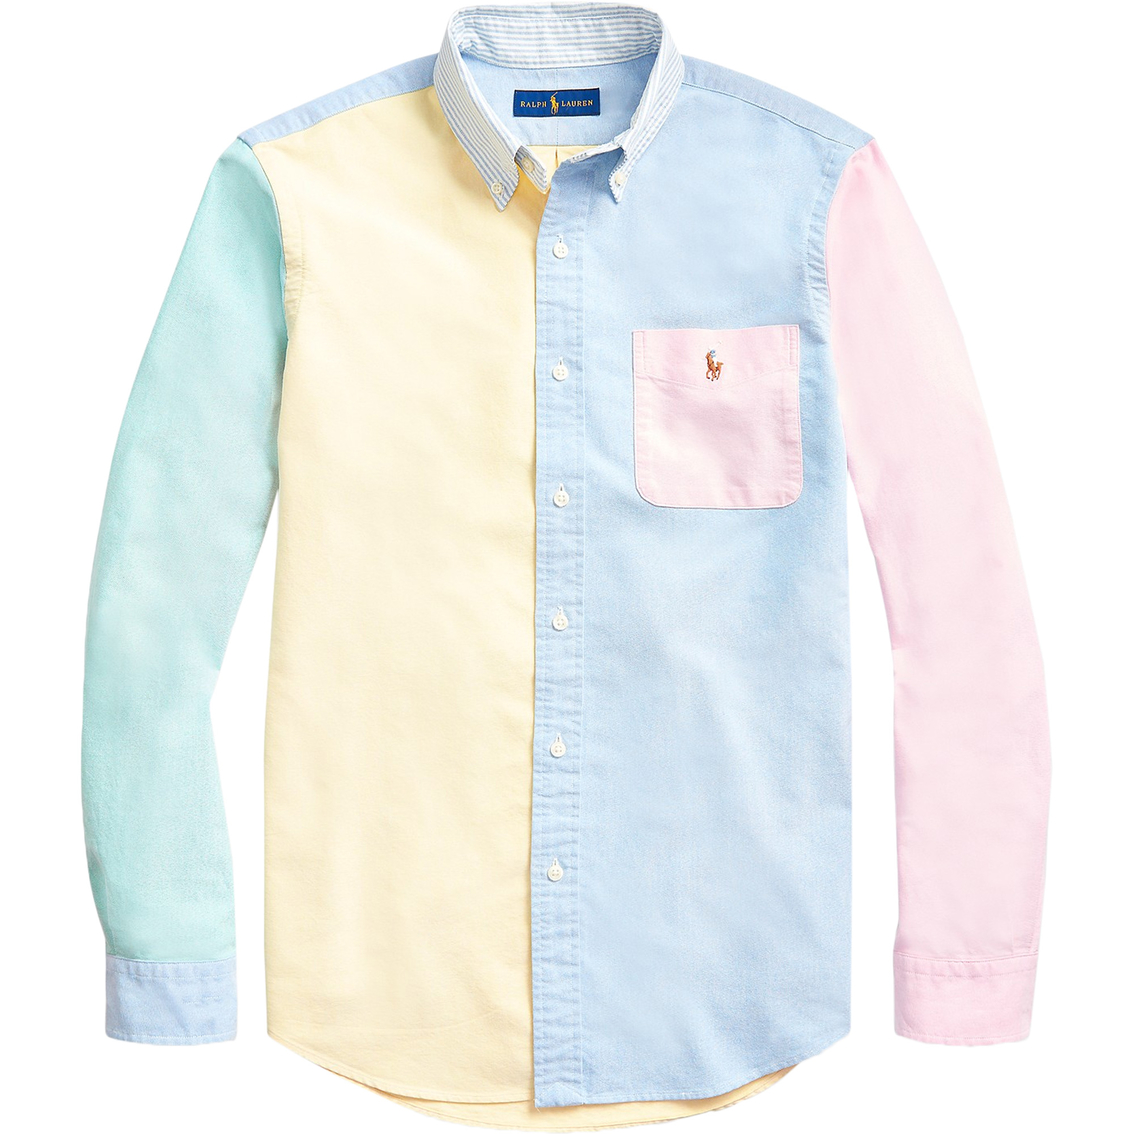 Polo Ralph Lauren Classic Fit Oxford Fun Shirt | Shirts | Clothing